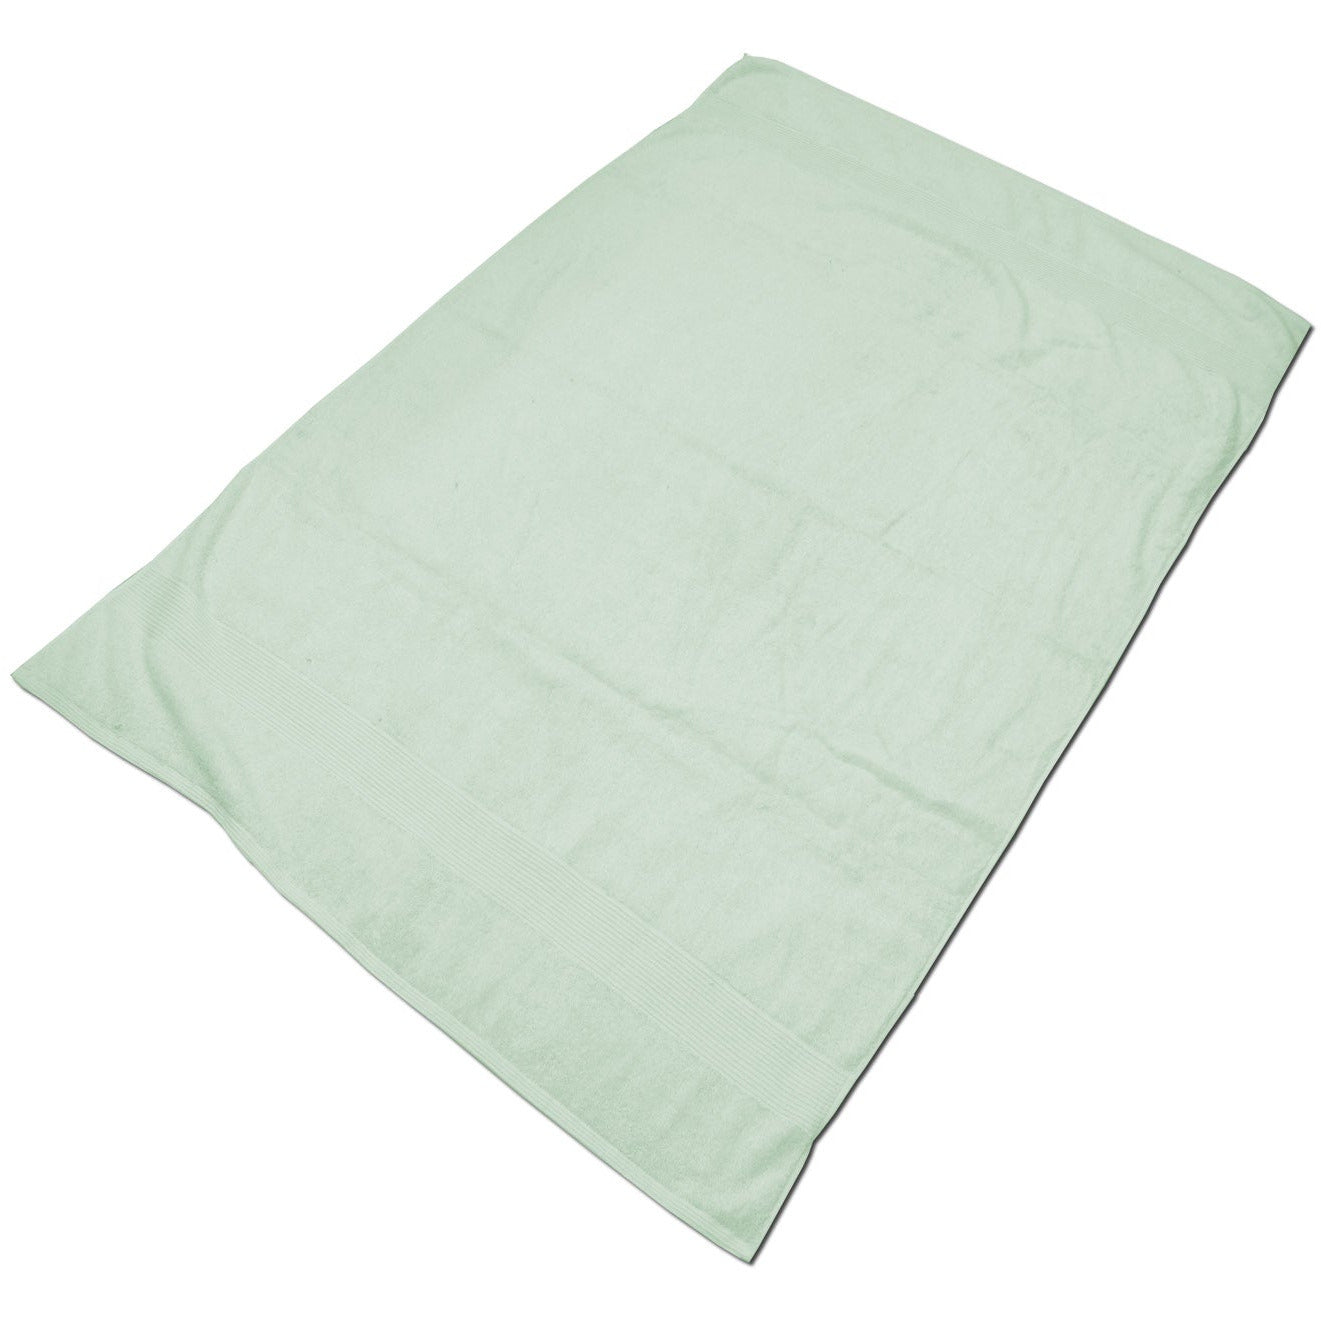 Bathsheet Towel - 100cm x 150cm